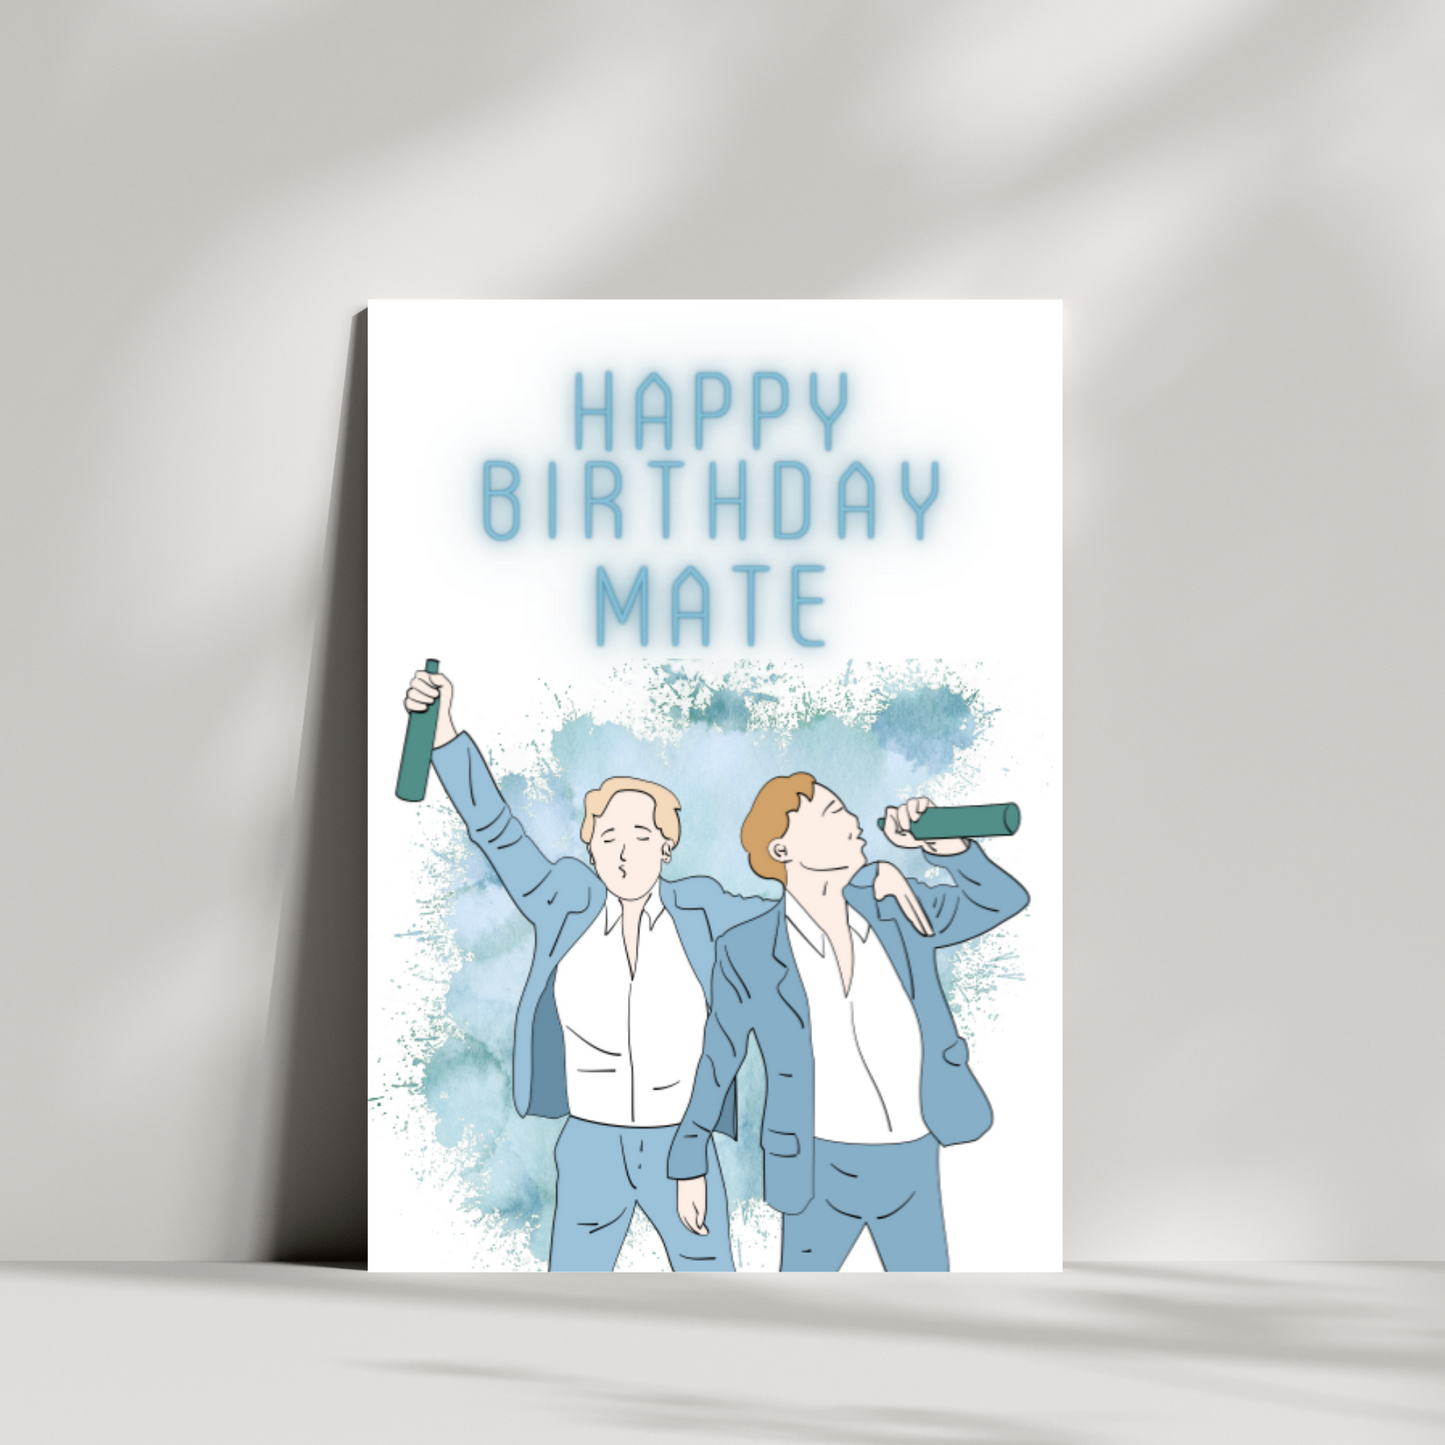 Happy Birthday mate birthday card